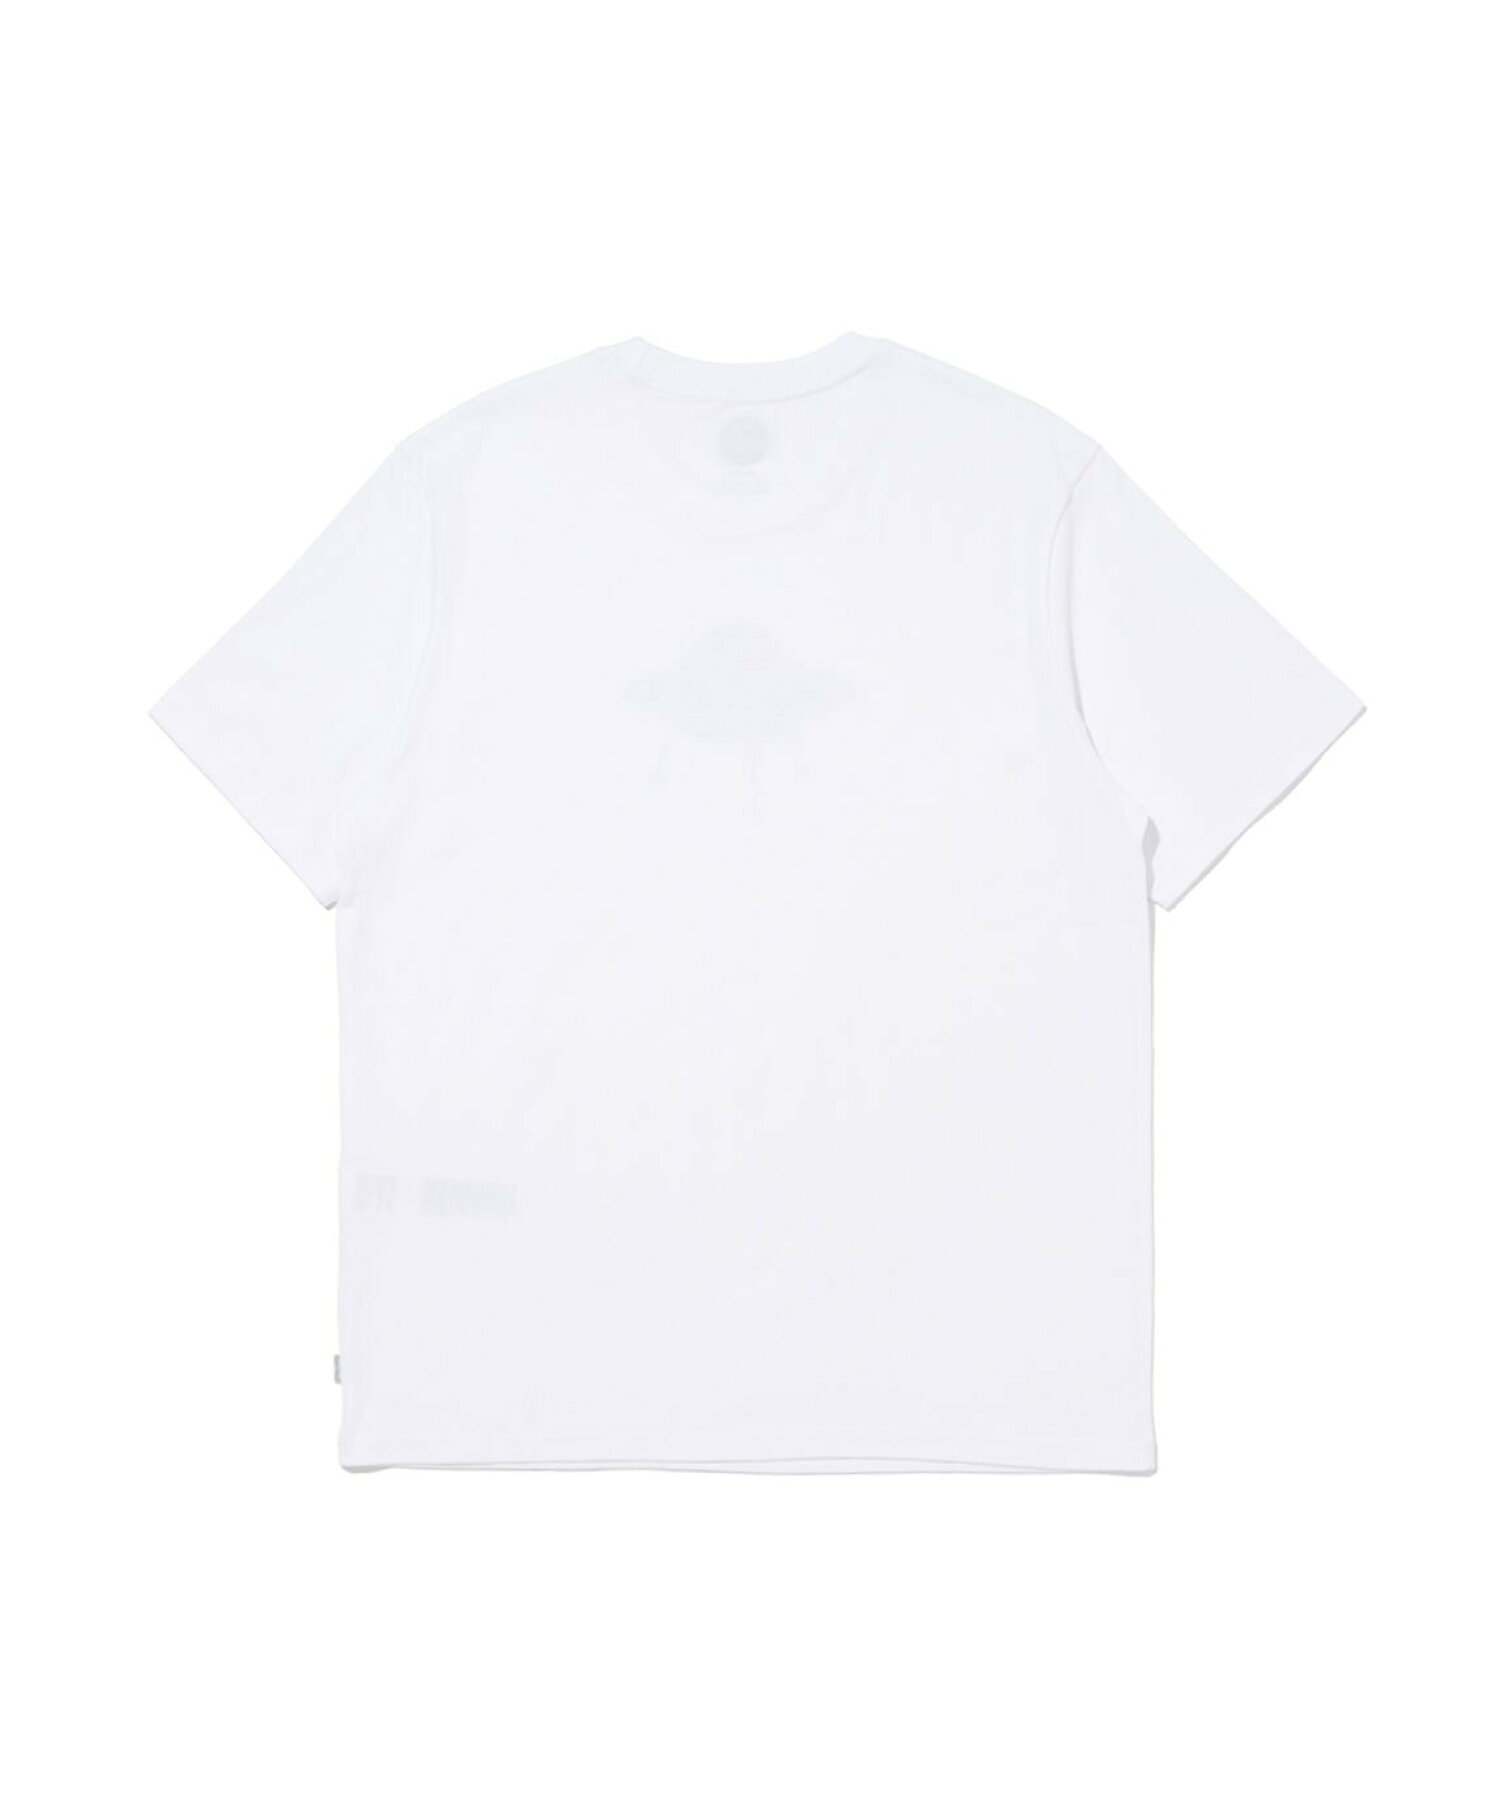 SILVERTABTM リラックスフィット Tシャツ ホワイト SPACESHIP